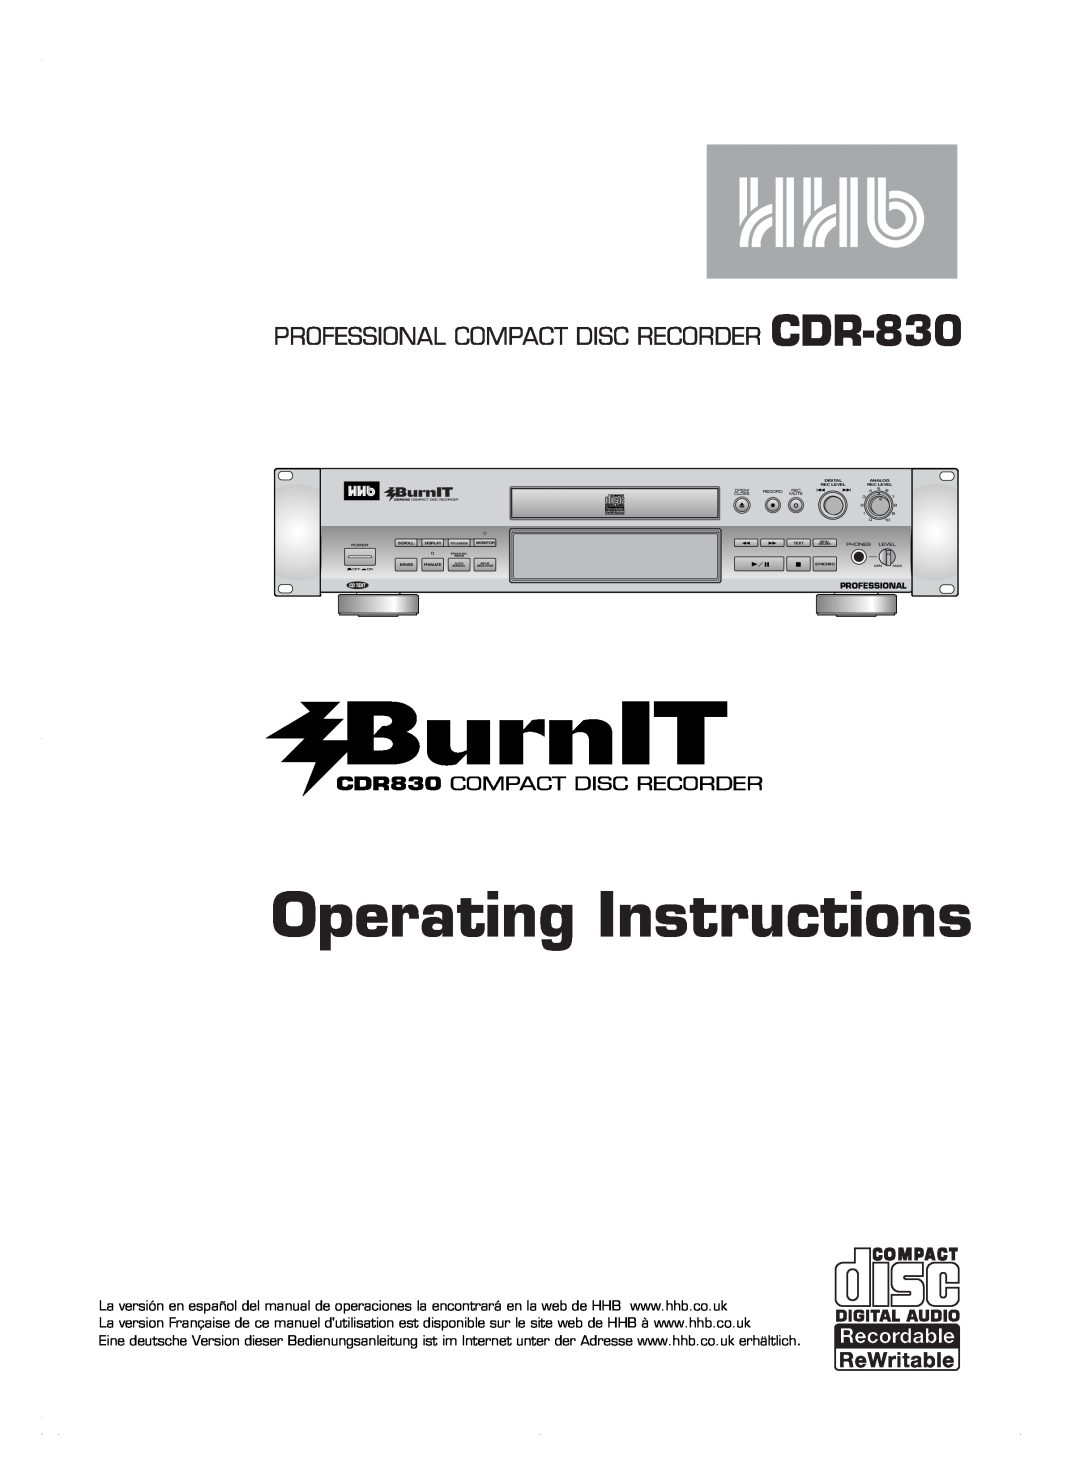 HHB comm CDR 830 manuel dutilisation Operating Instructions, CDR-830 